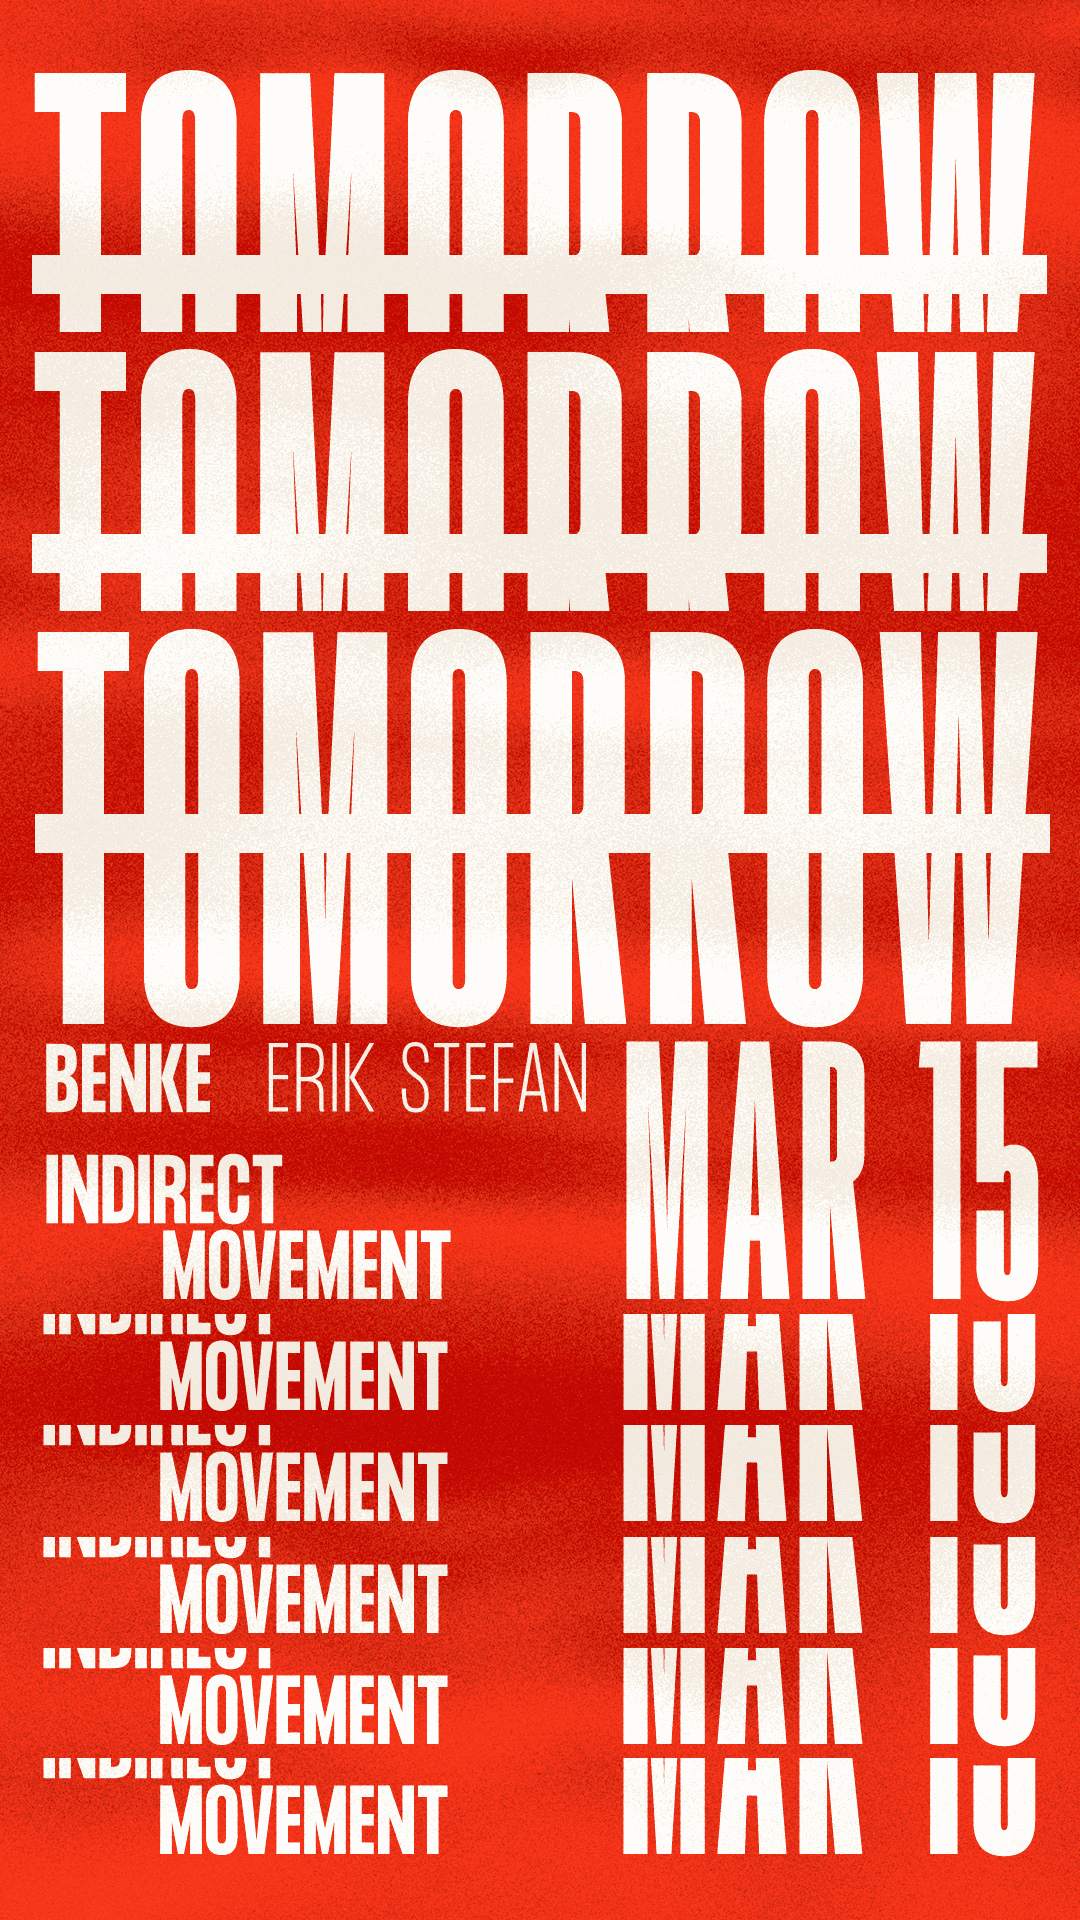 NO TOMORROW: Benke, Erik Stefan, Indirect Movement - フライヤー表